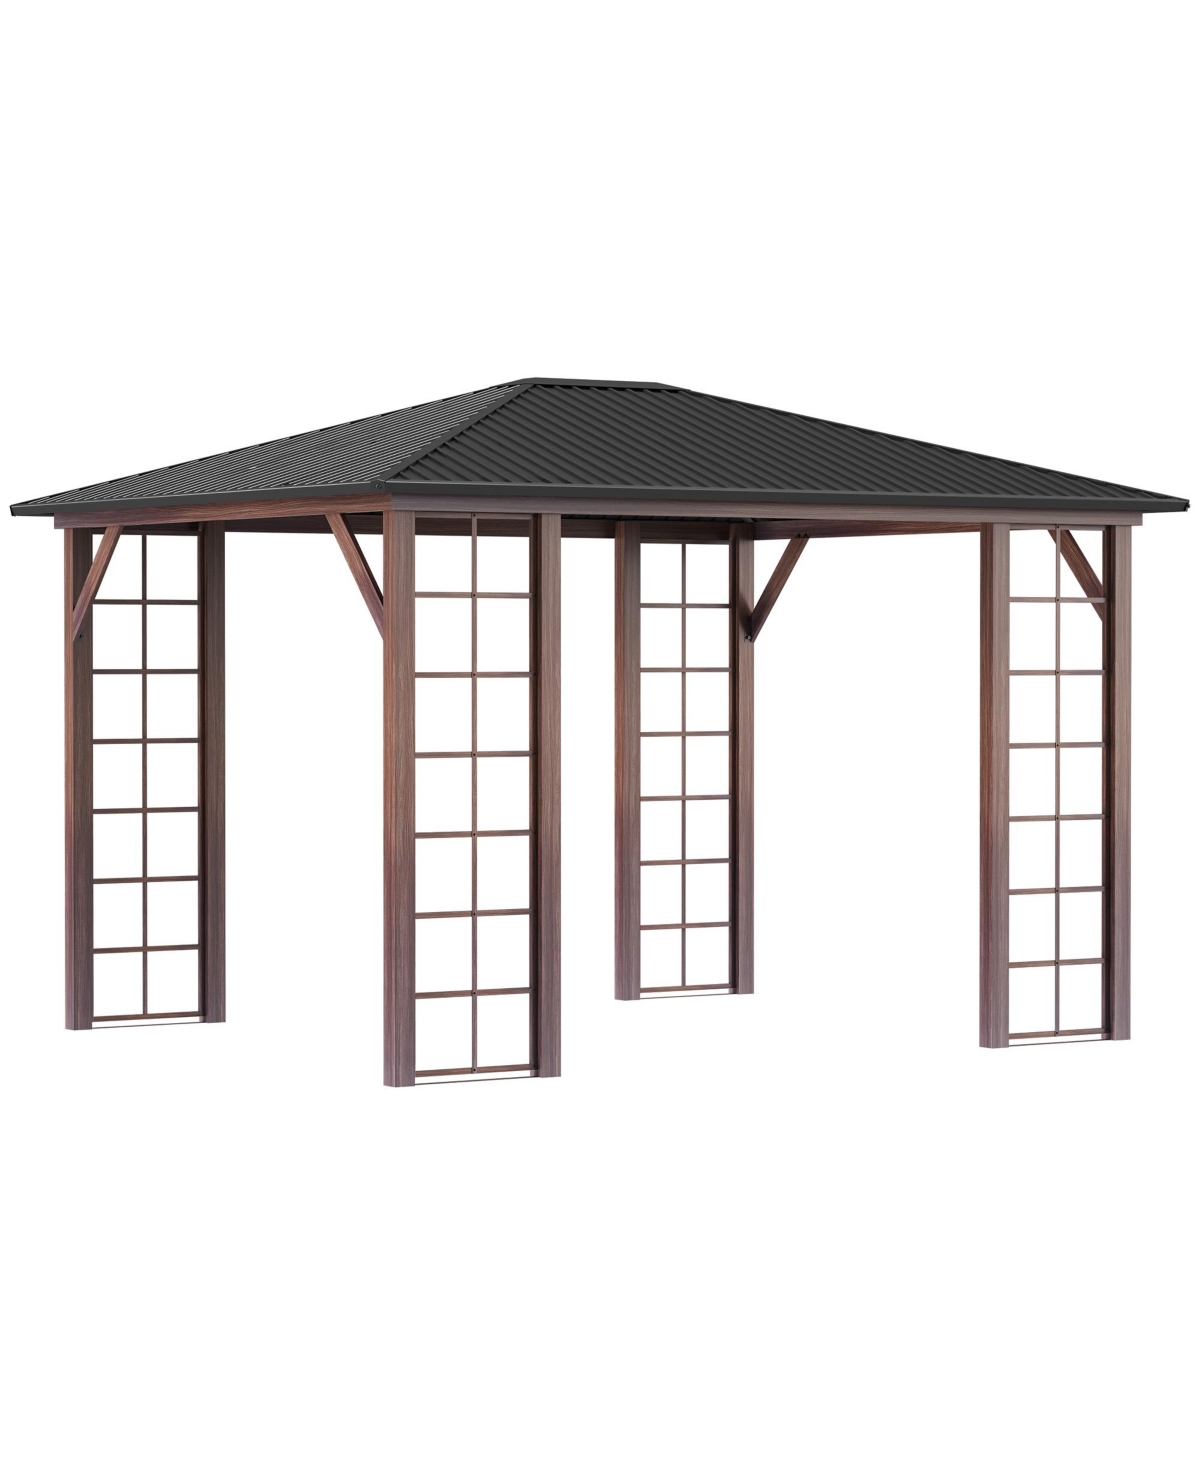 10' x 12' Hardtop Gazebo, Waterproof Metal Roof Permanent Pavilion with Wood Grain Metal Frame, Outdoor Gazebo Canopy, for Garden, Patio, Bac